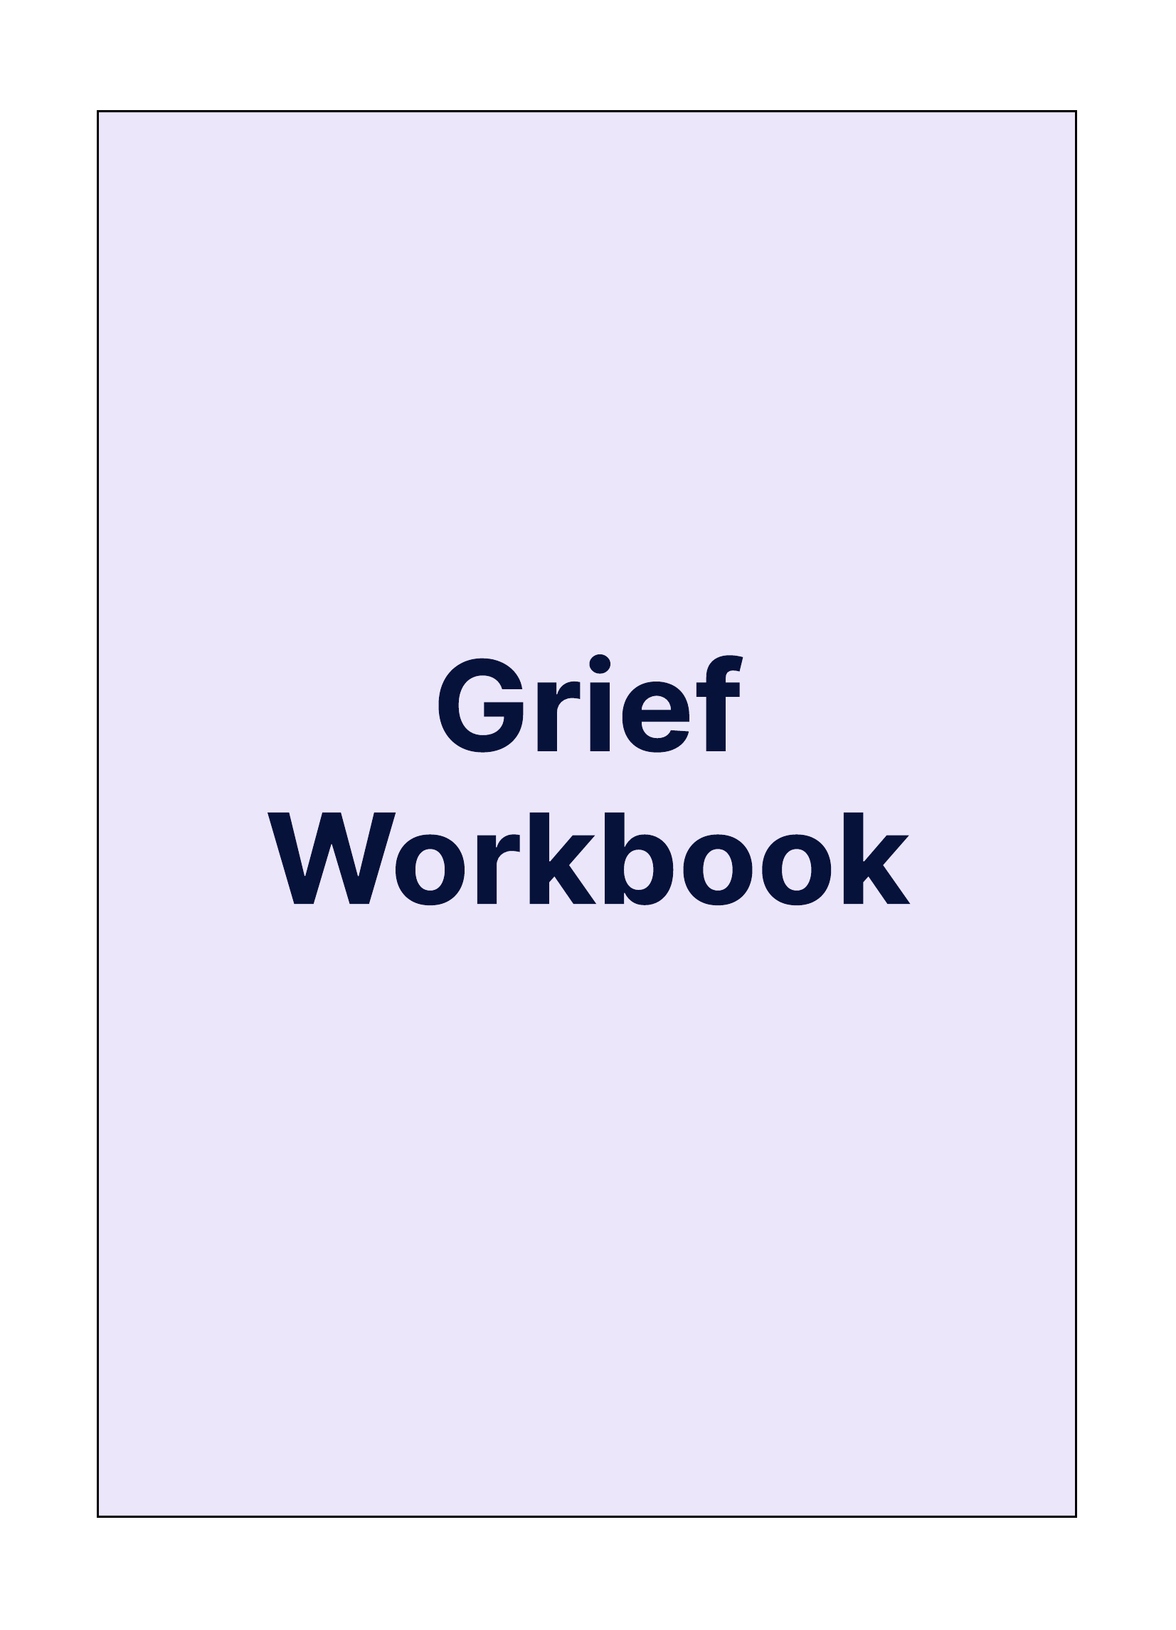 Grief Workbook PDF Example